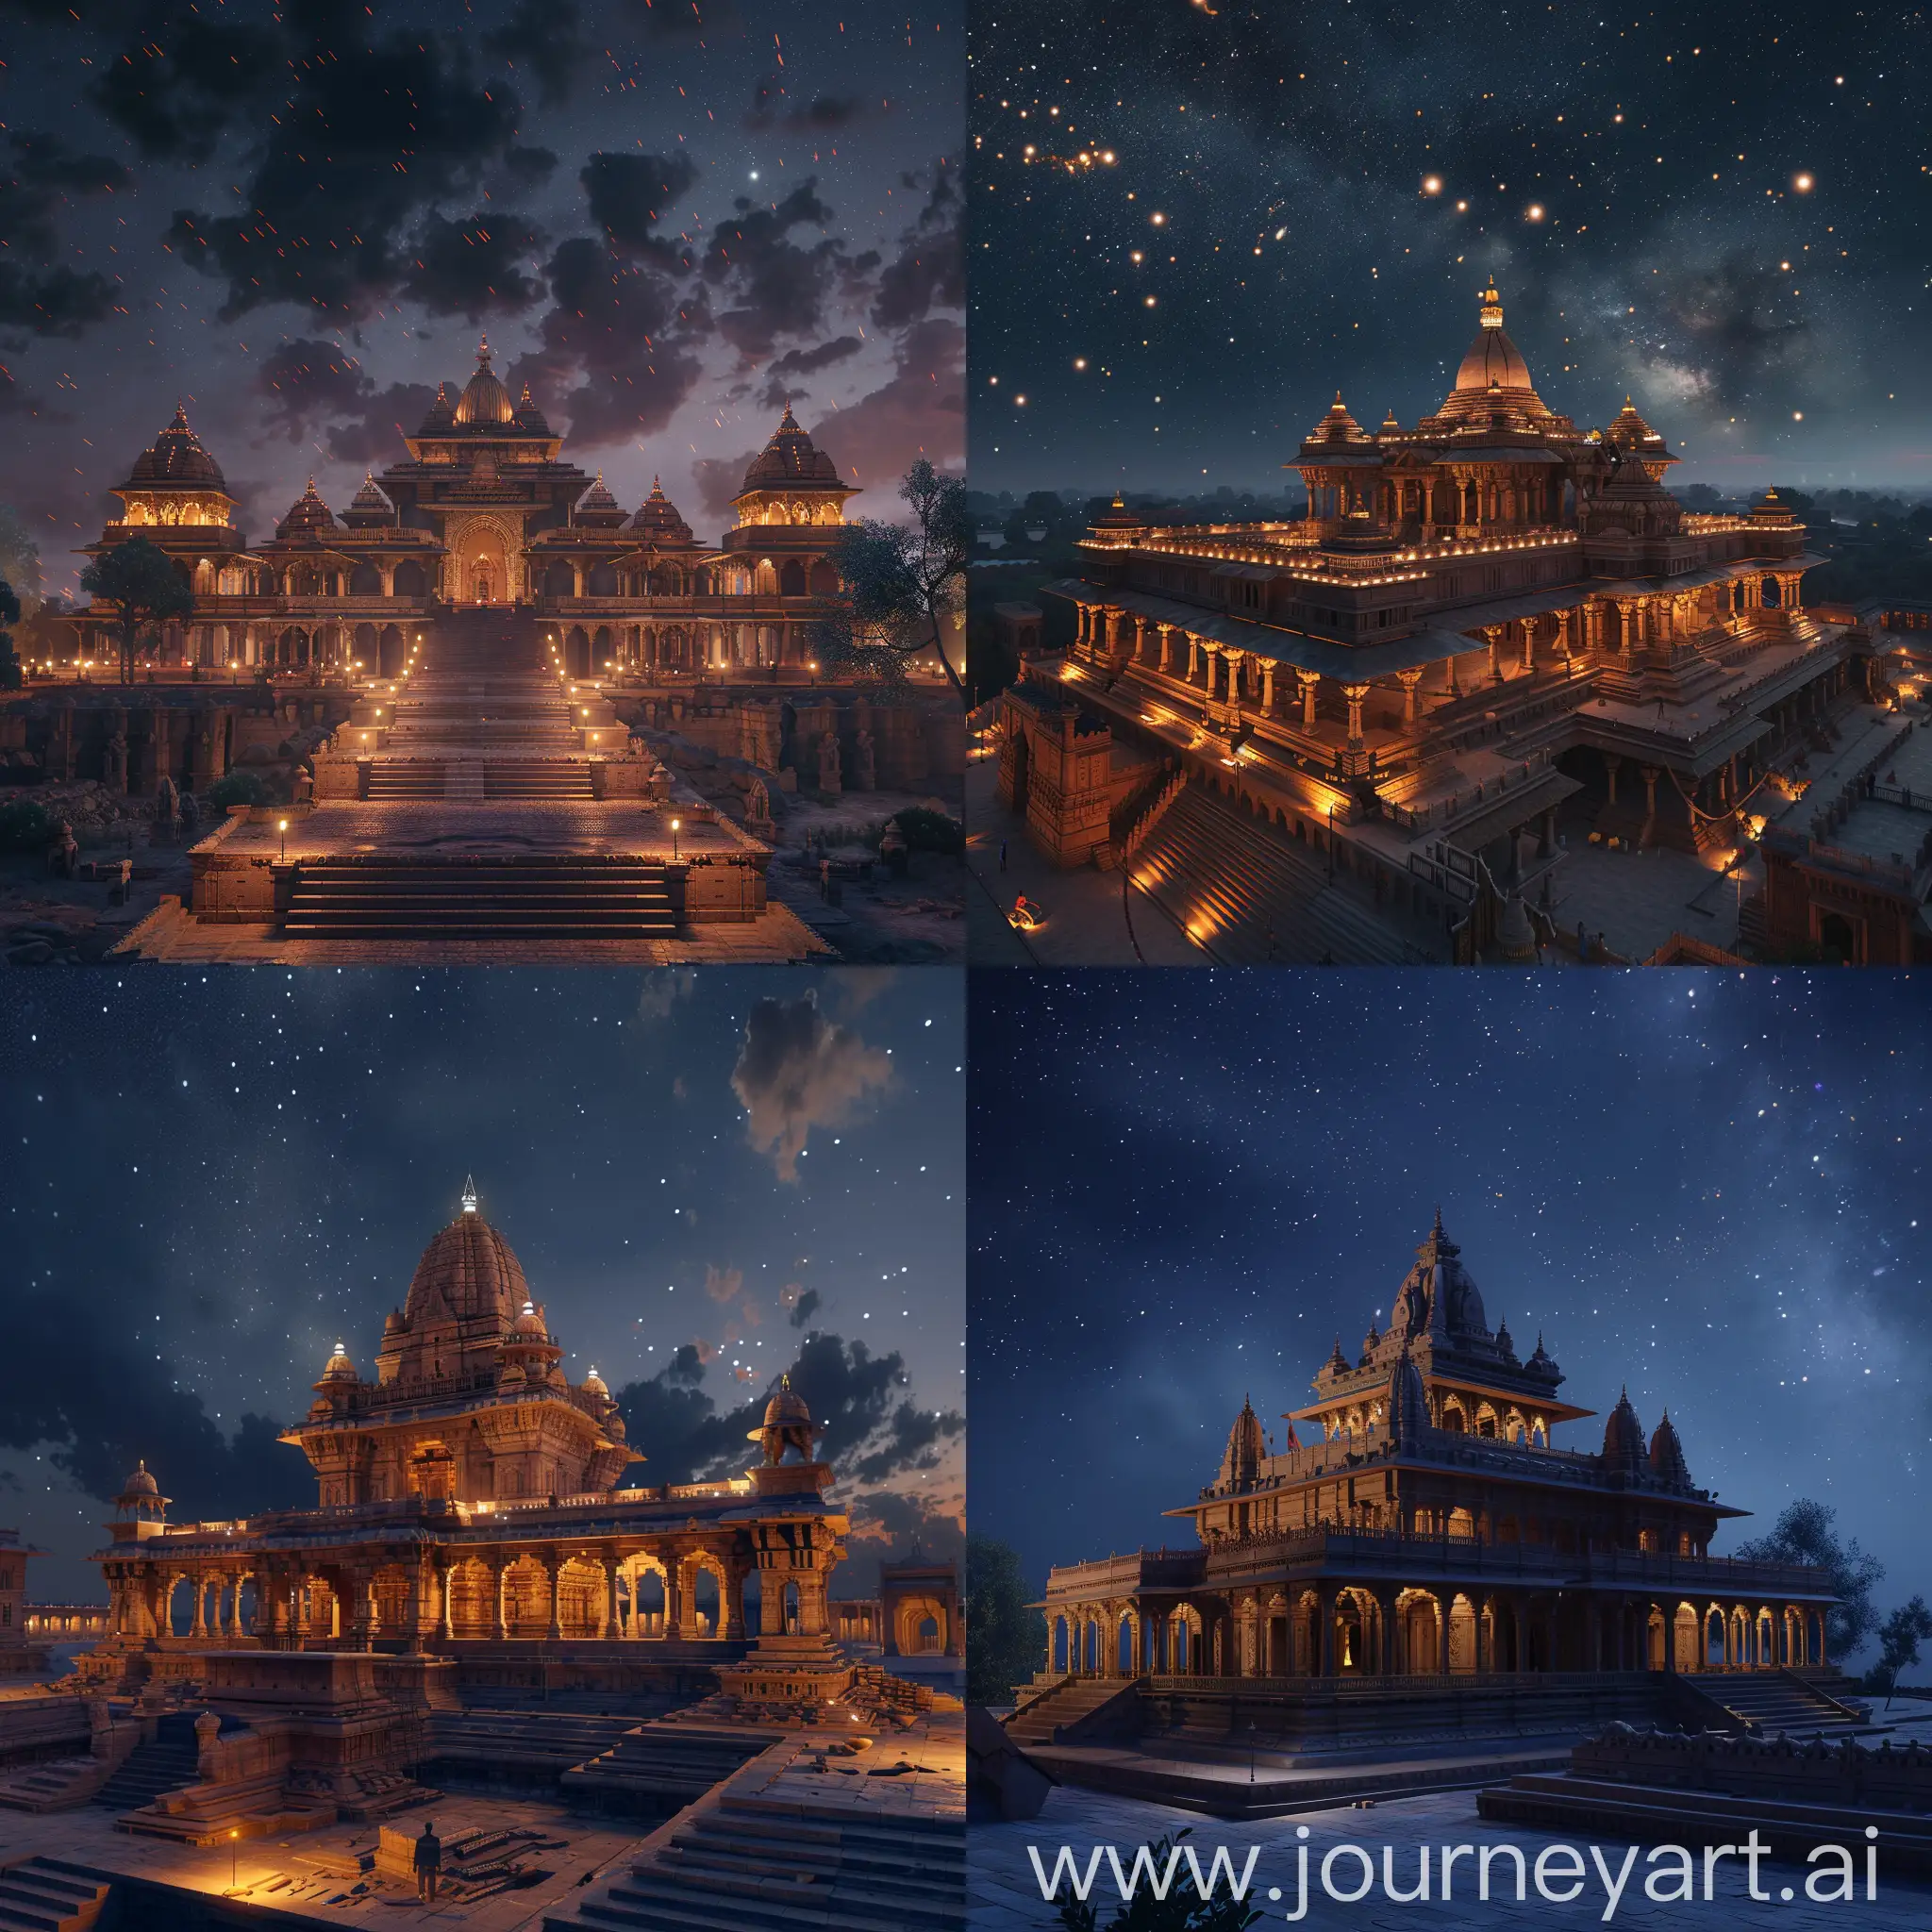 Cinematic-Night-View-of-Ayodhya-Ram-Mandir-in-Stunning-8K-Resolution